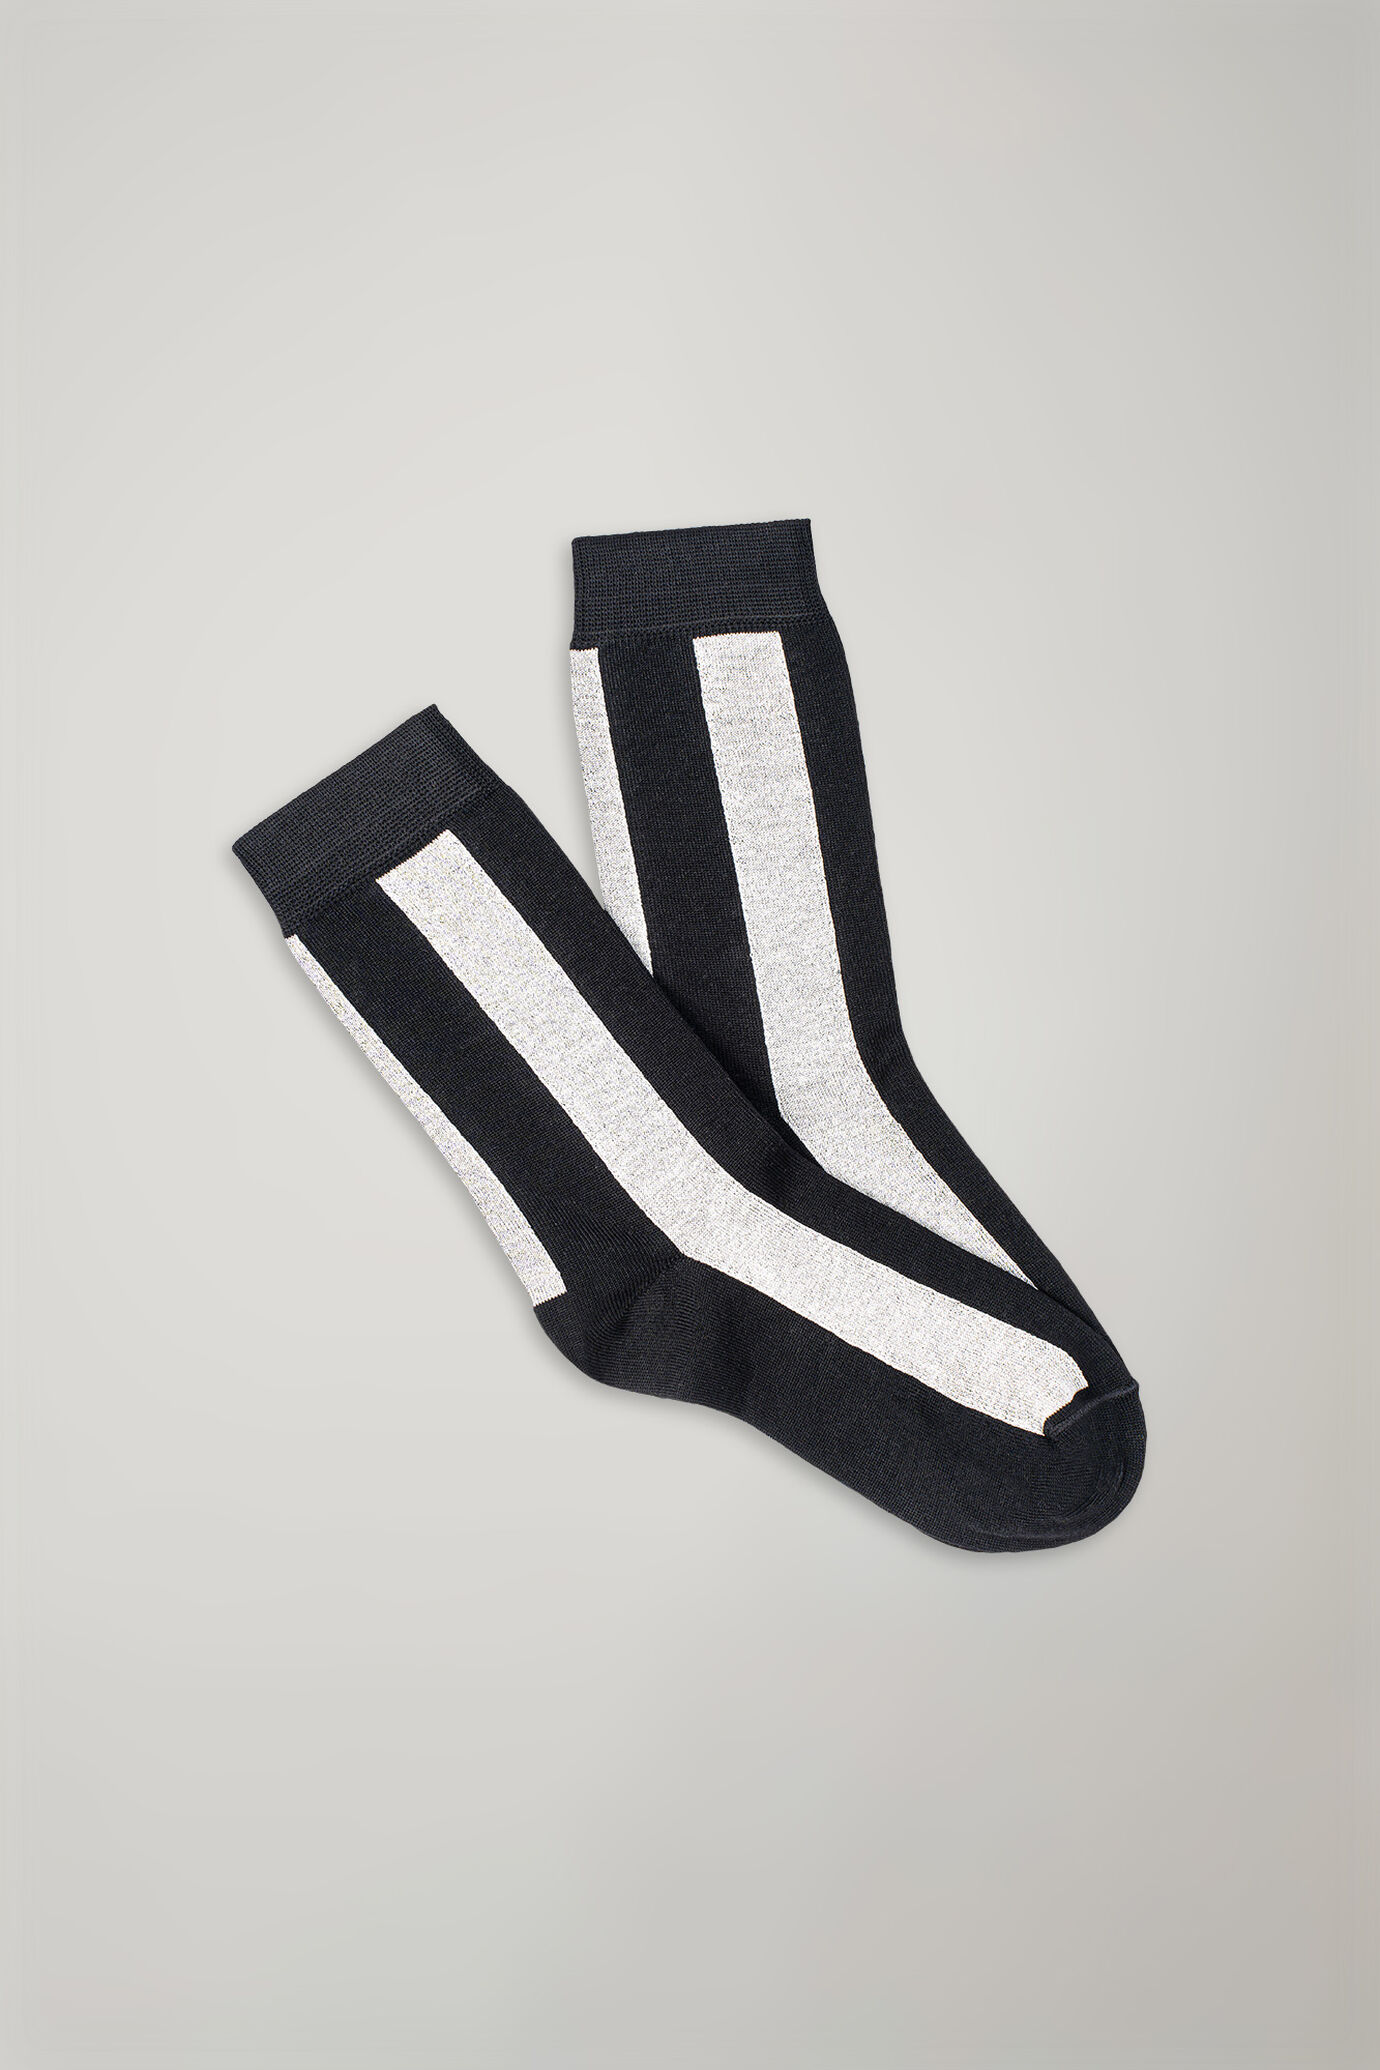 Women's bootie striped socks made in Italy